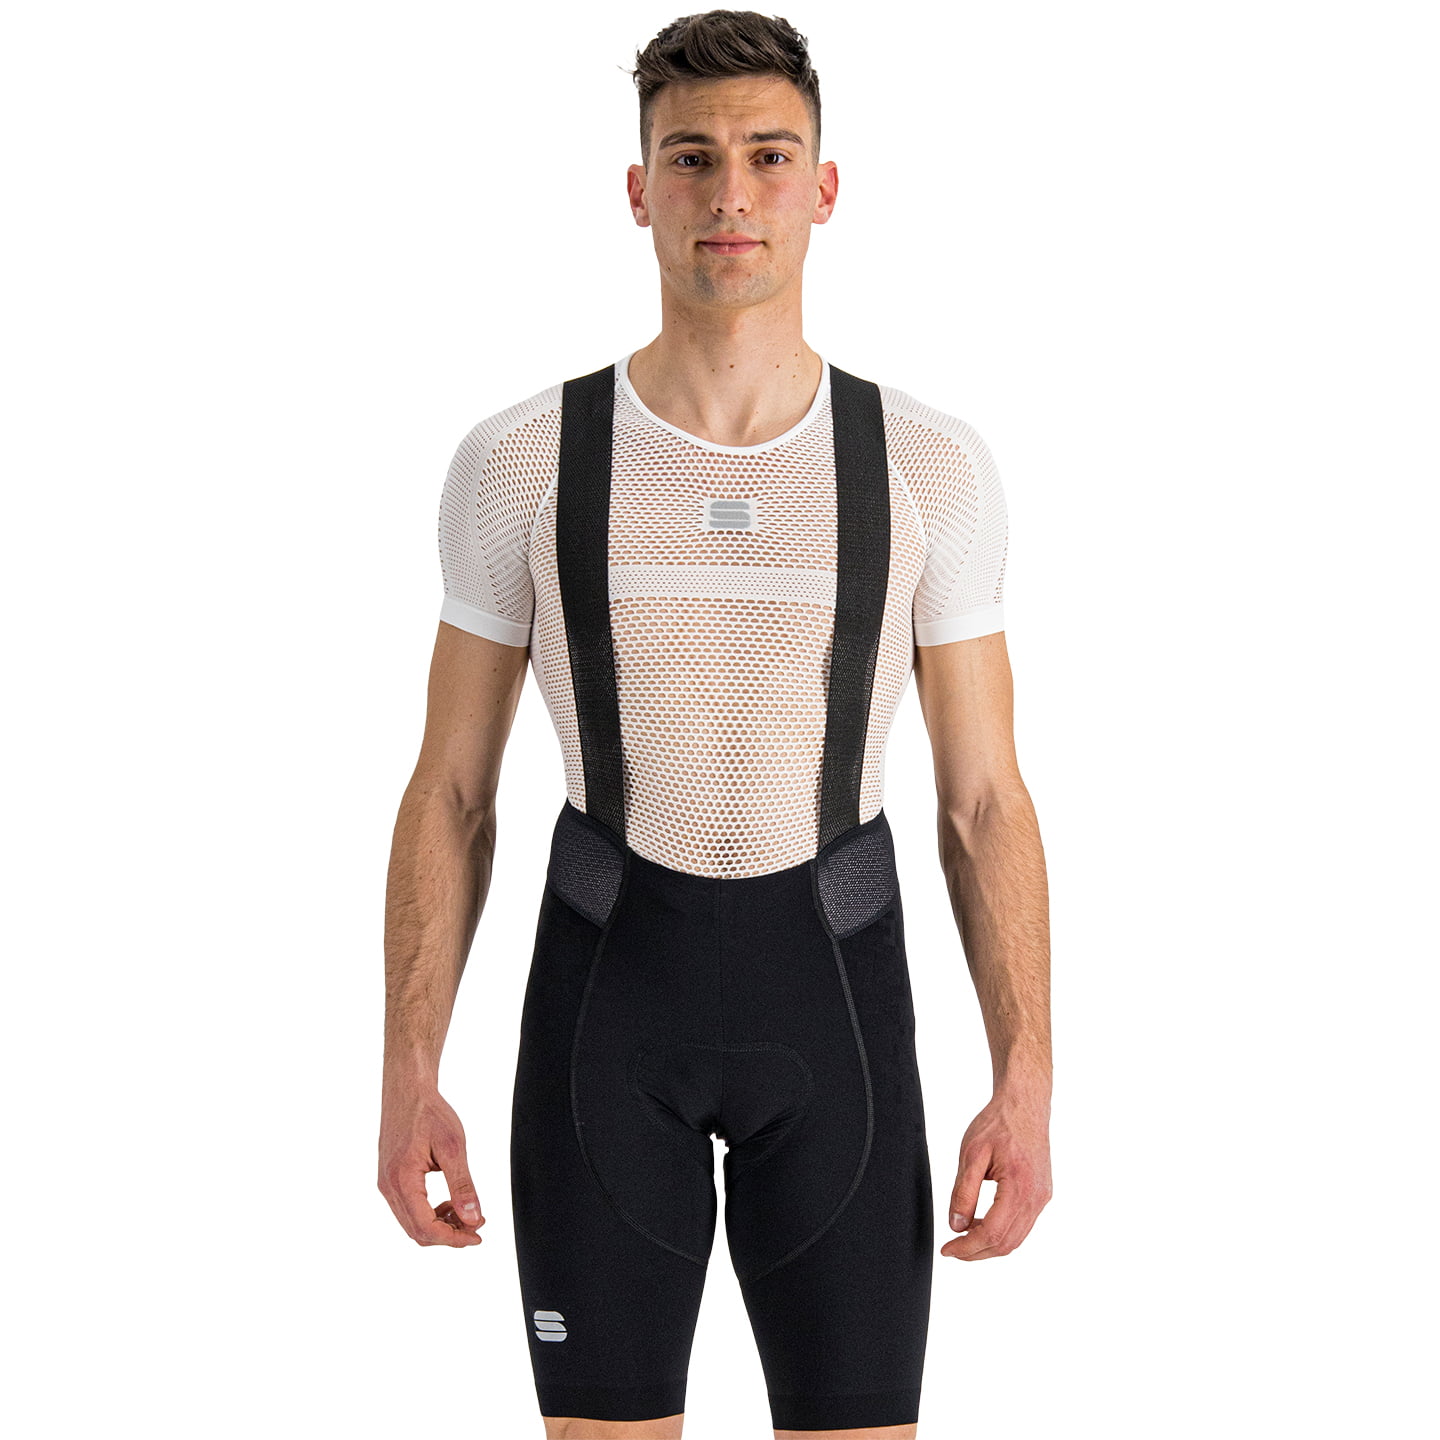 SPORTFUL Total Comfort Bib Shorts Bib Shorts, for men, size 2XL, Cycle shorts, Cycling clothing